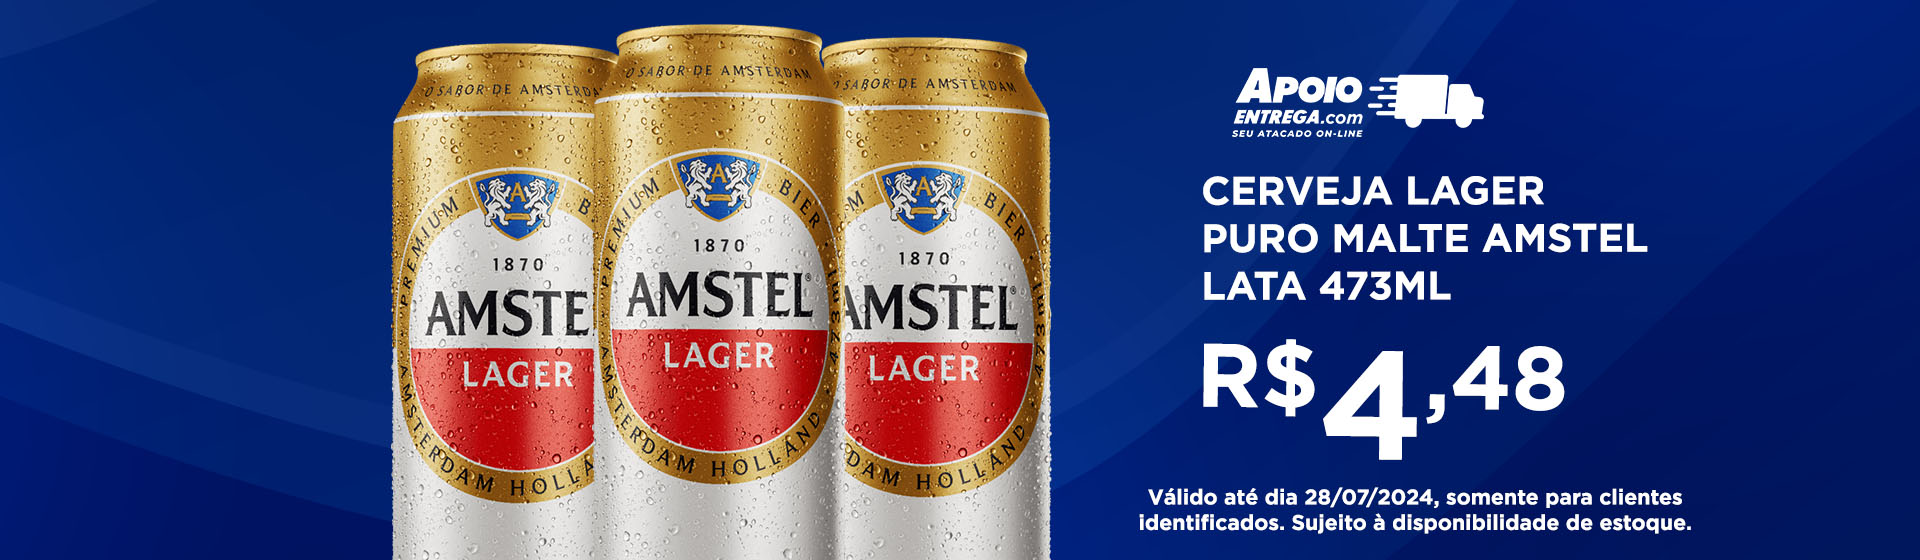 Cerveja Lager Puro Malte Amstel Lata 473ml R$ 4,48 até